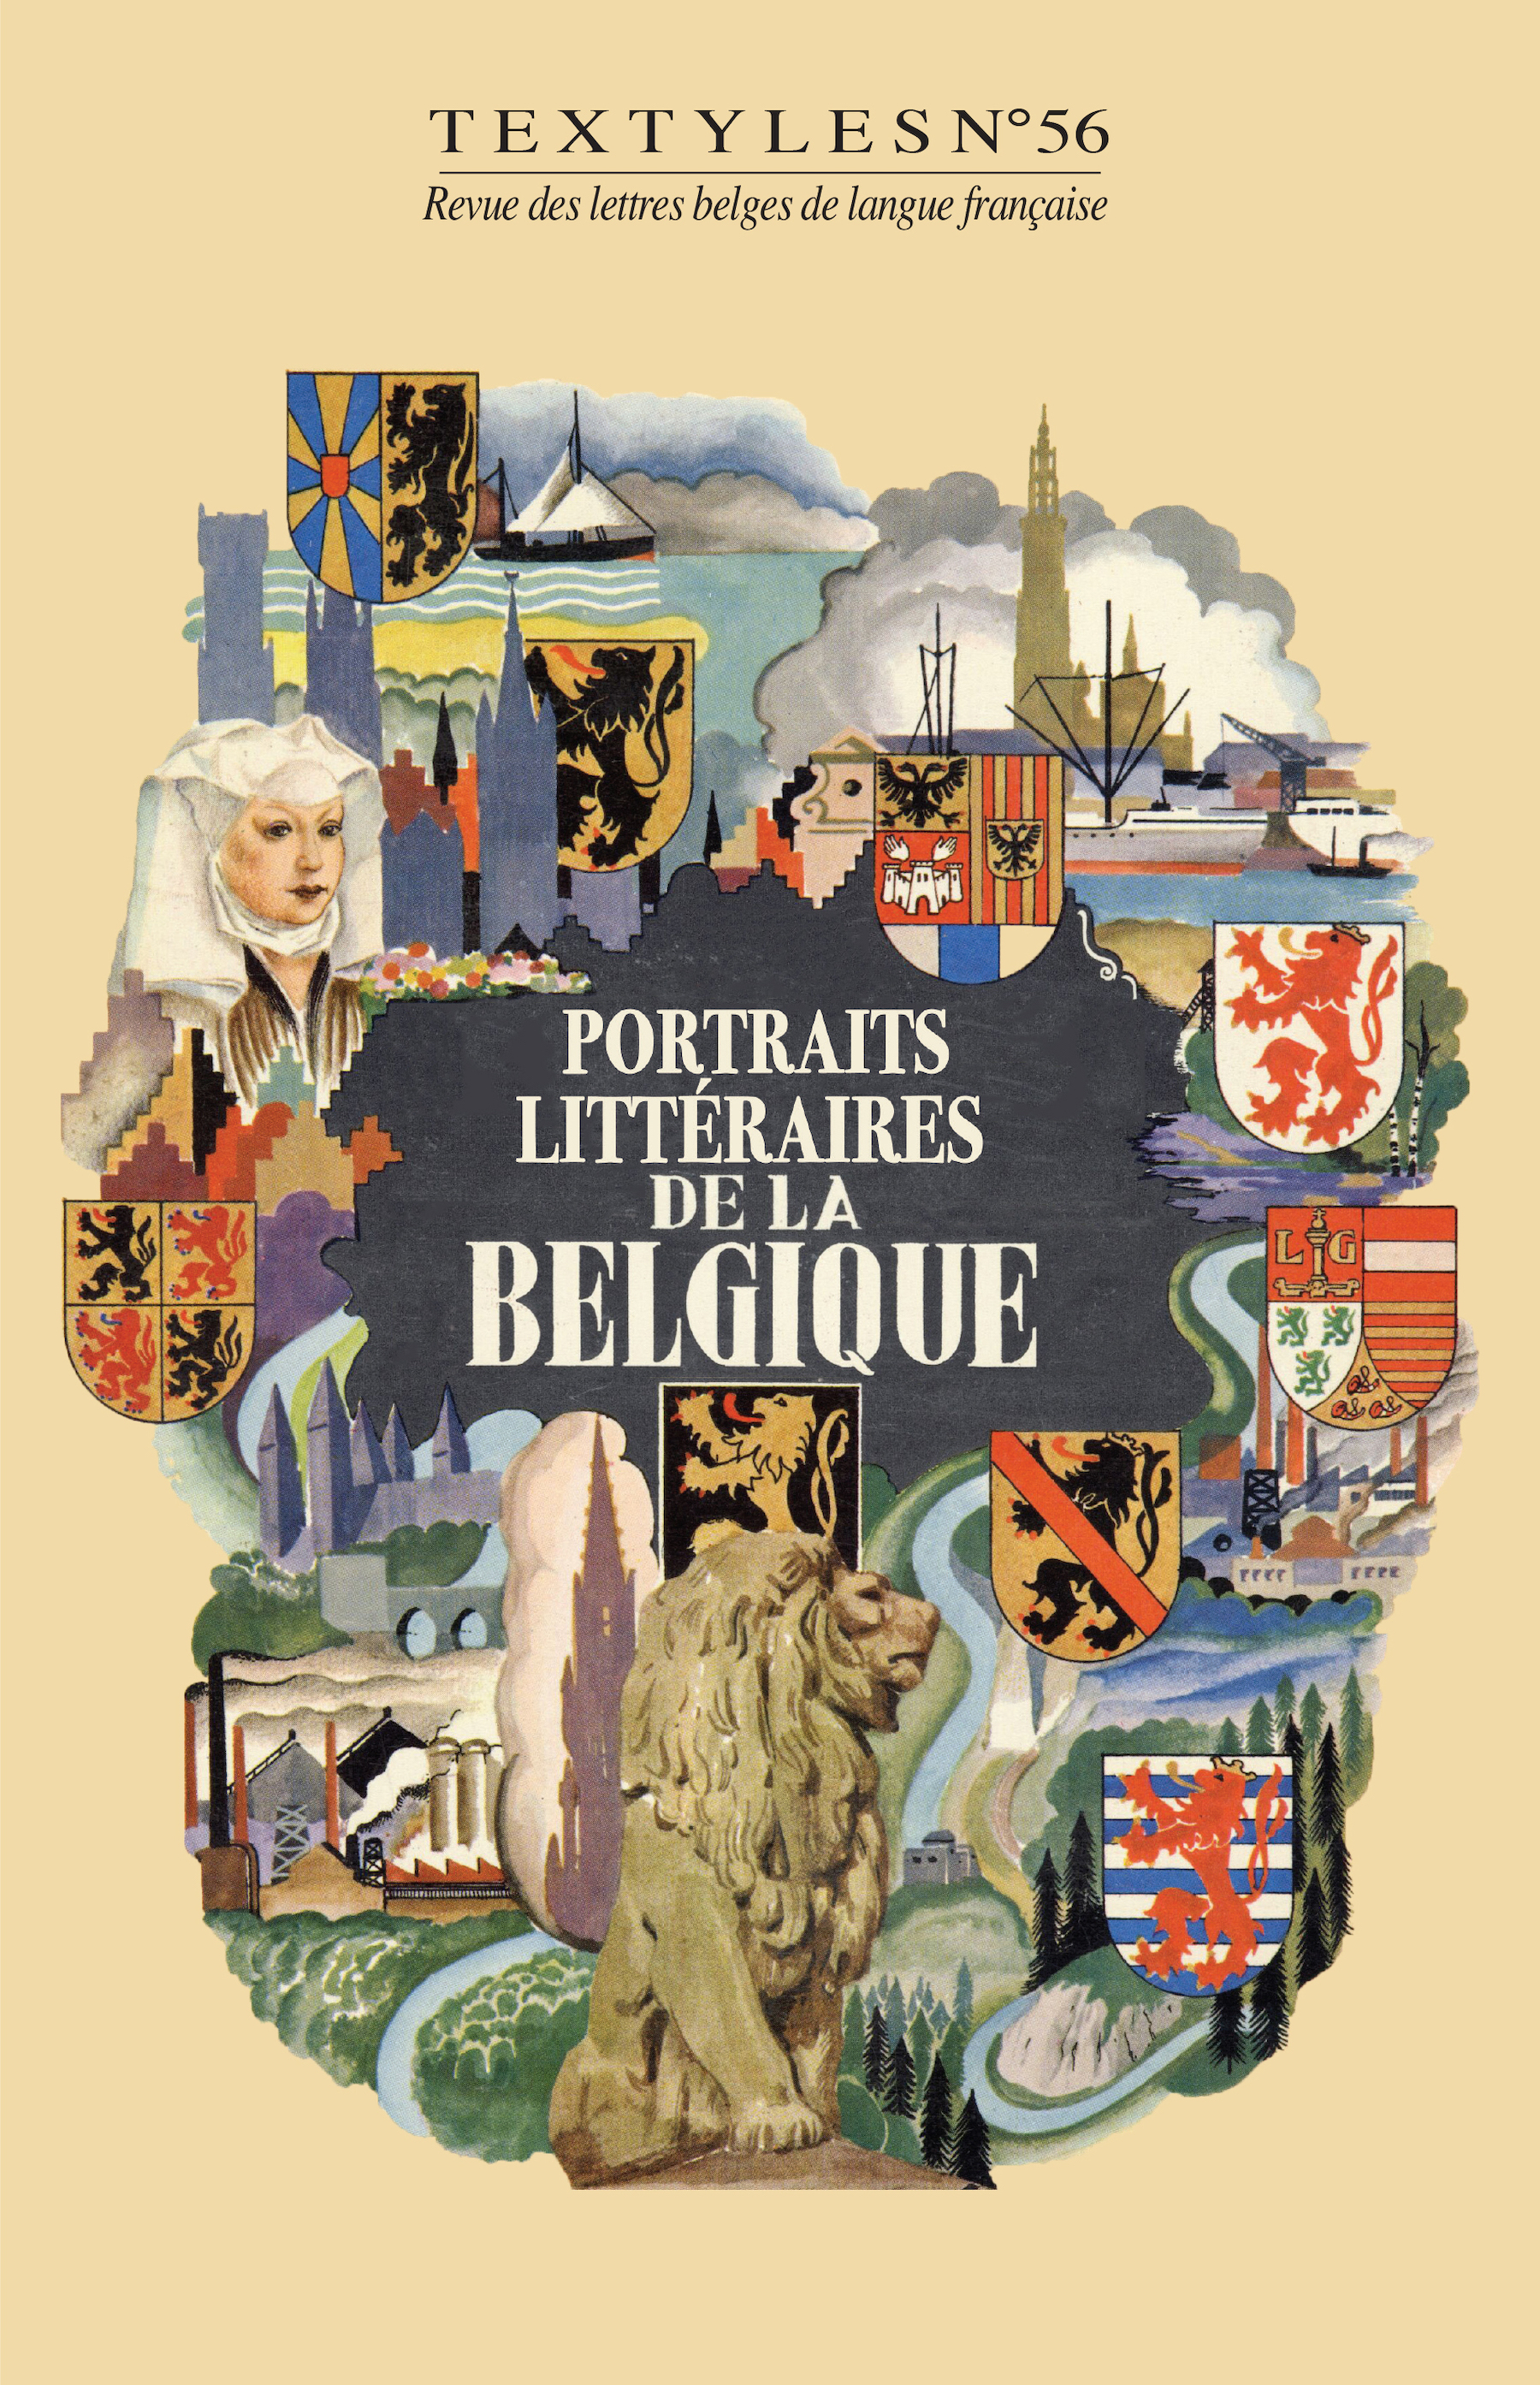 Portraits littéraires de la Belgique (revue Textyles, L. Brogniez & D. Martens, dir.)